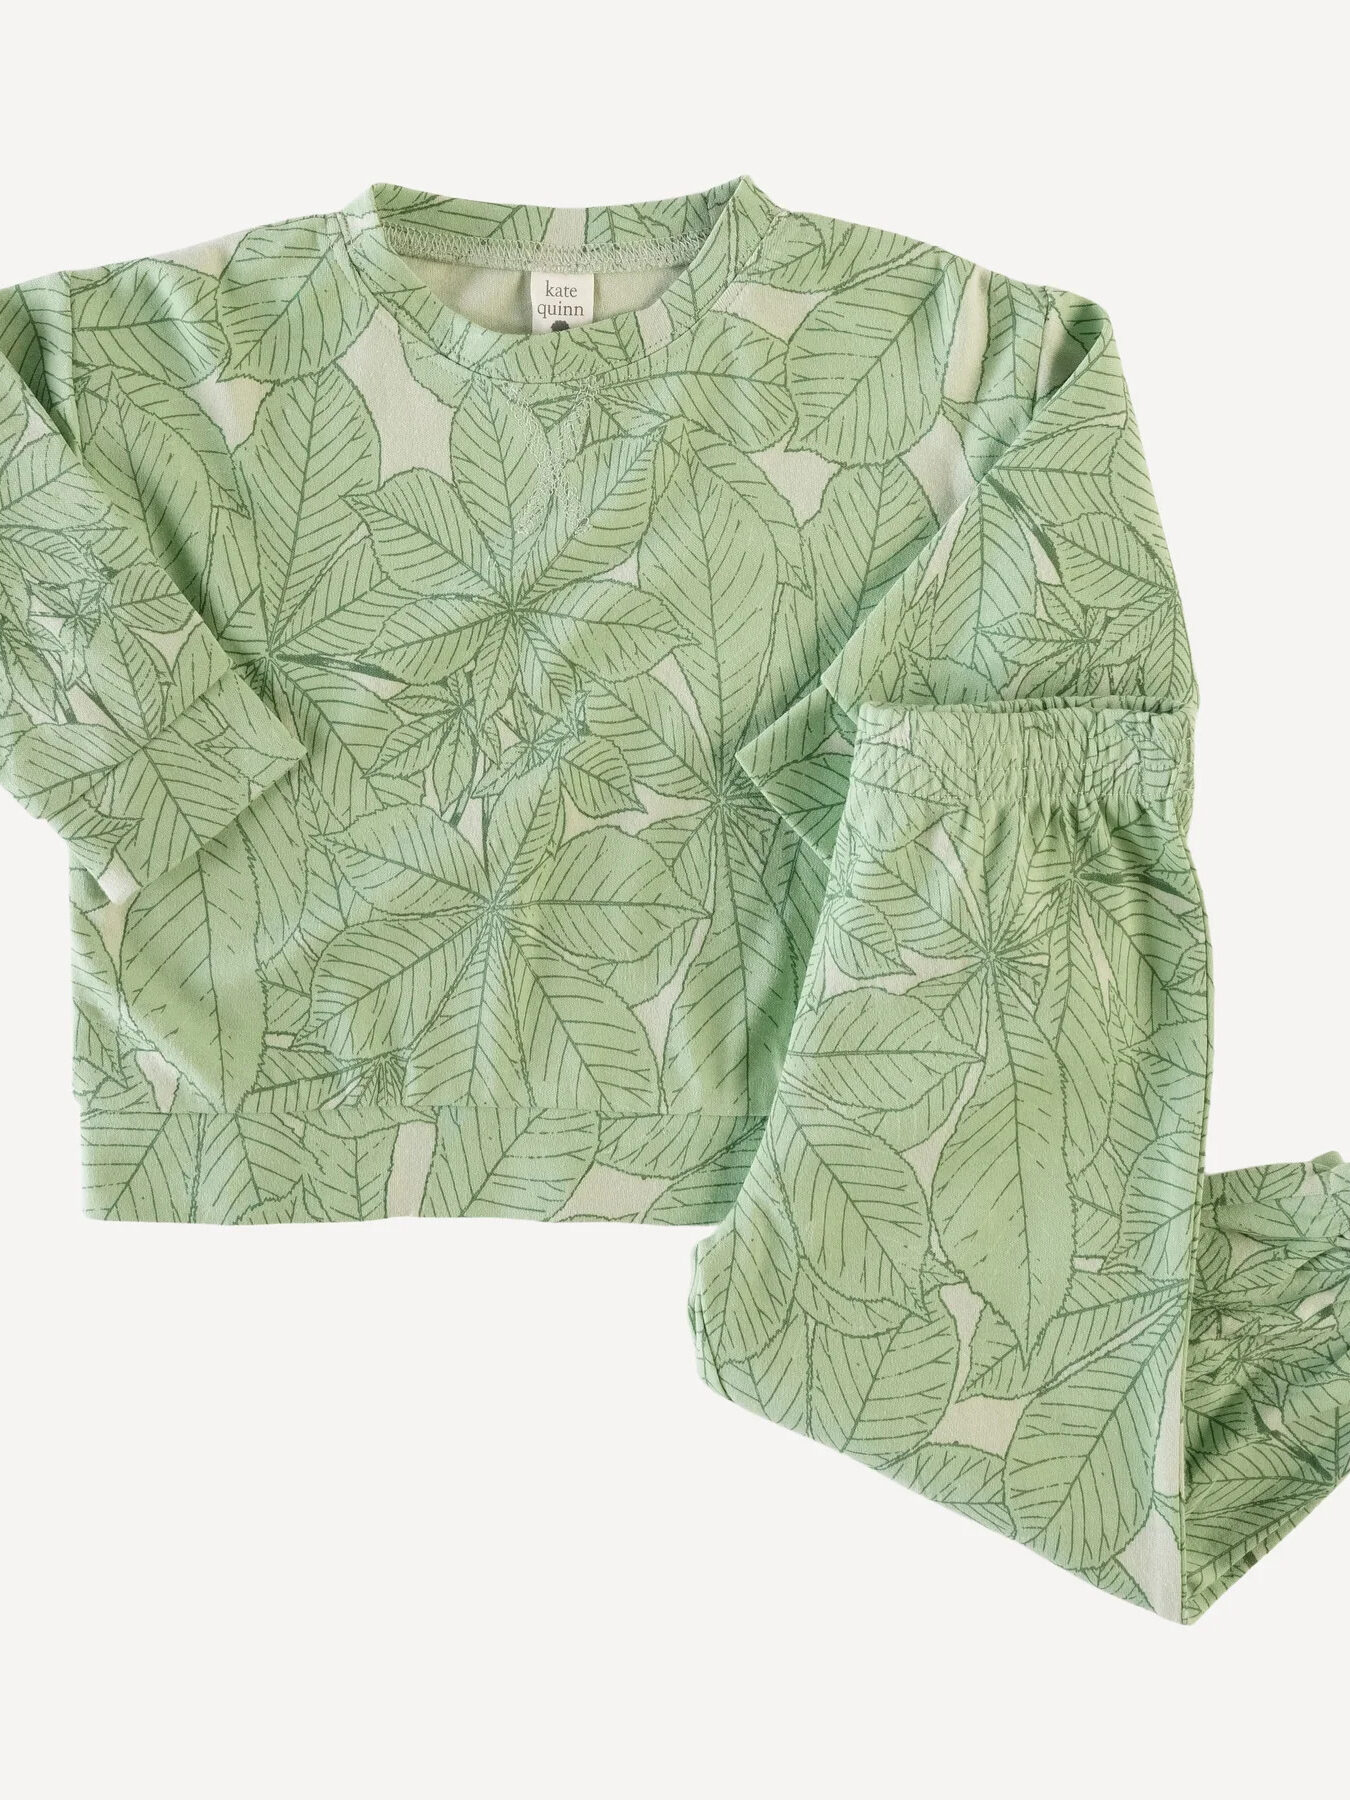 A green leaf print pajama set for a baby.